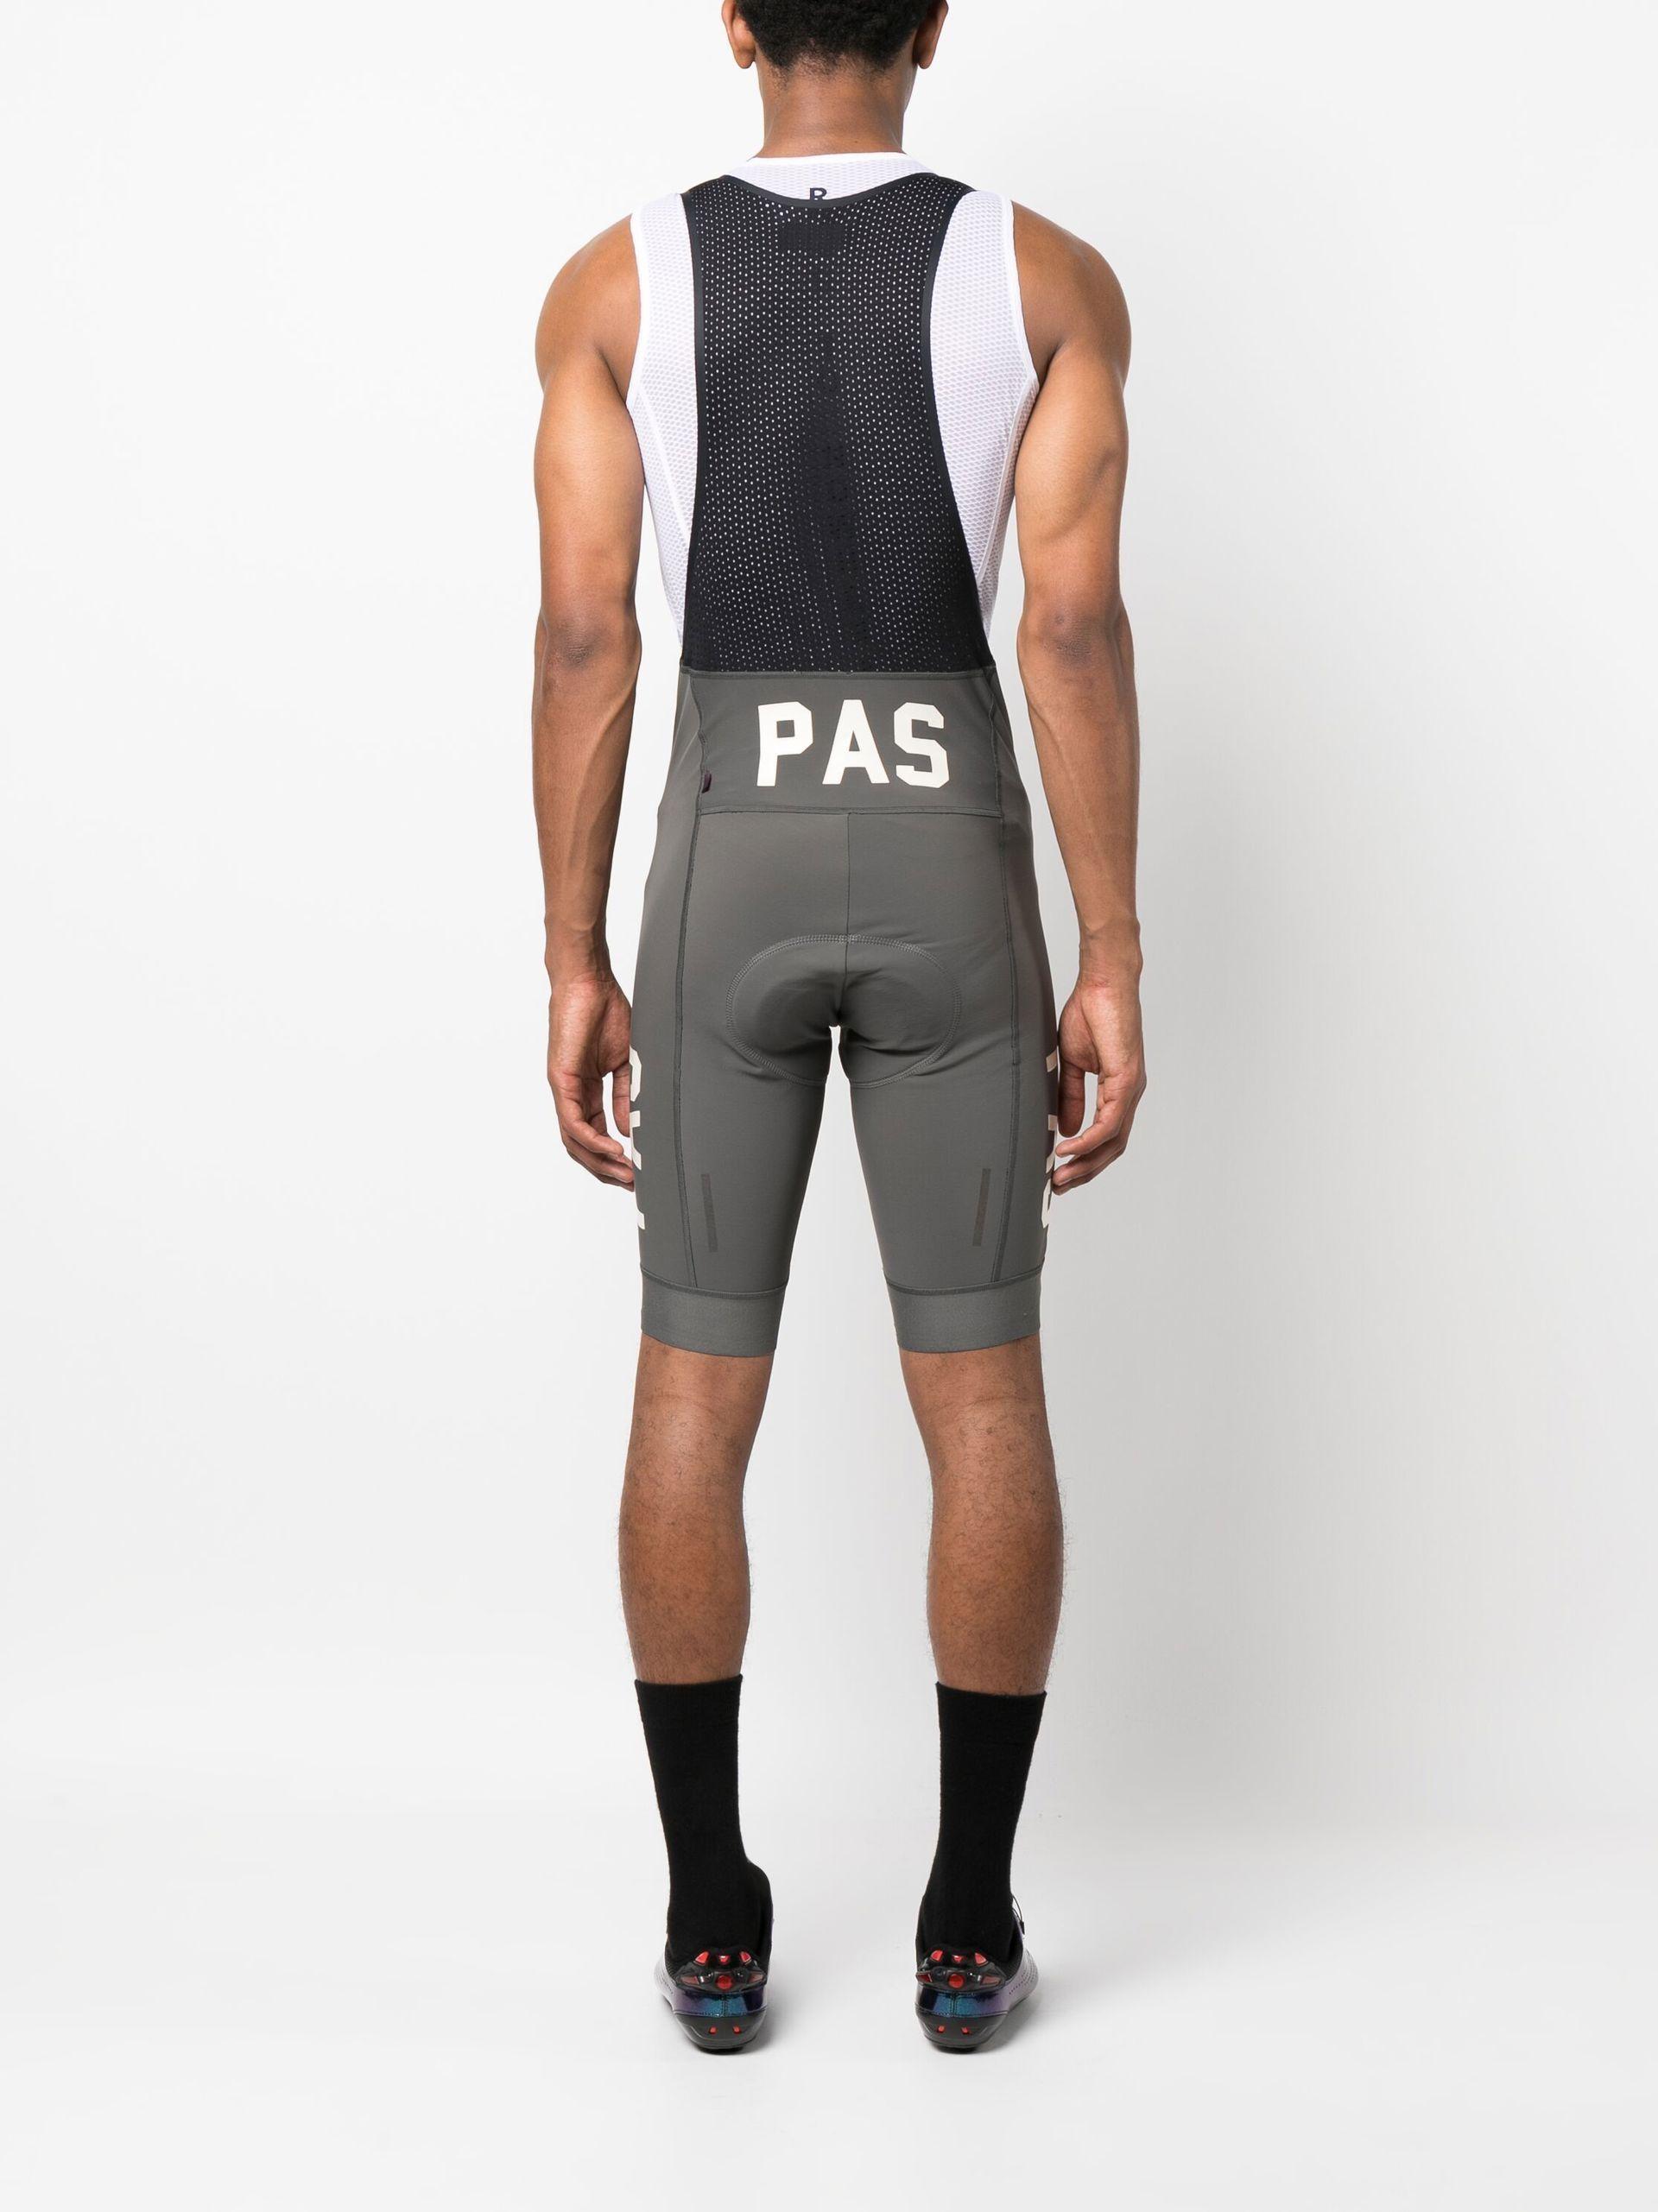 Pas Normal Studios Pas Deep Winter Cycling Bib Shorts in Gray for Men